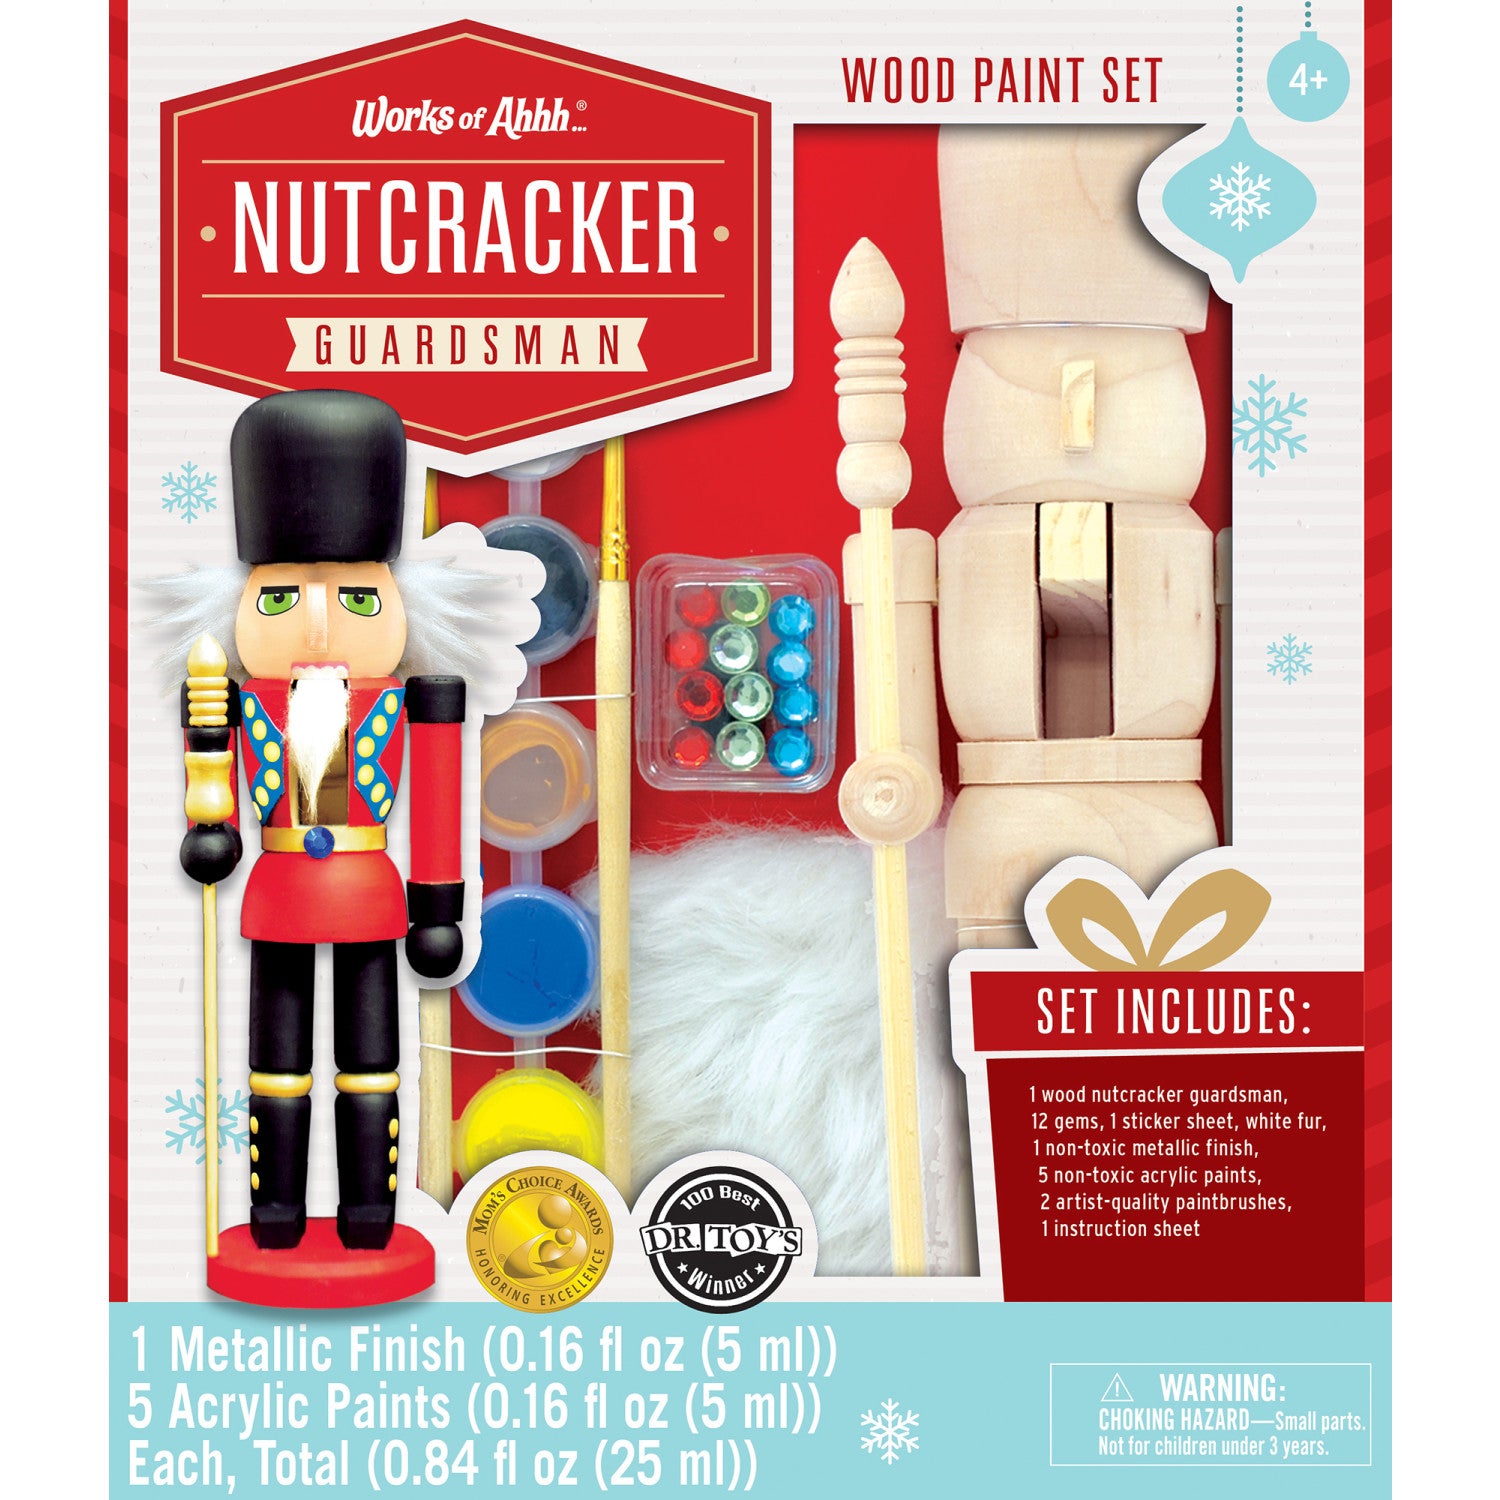 Nutcracker Guard Wood Paint Set